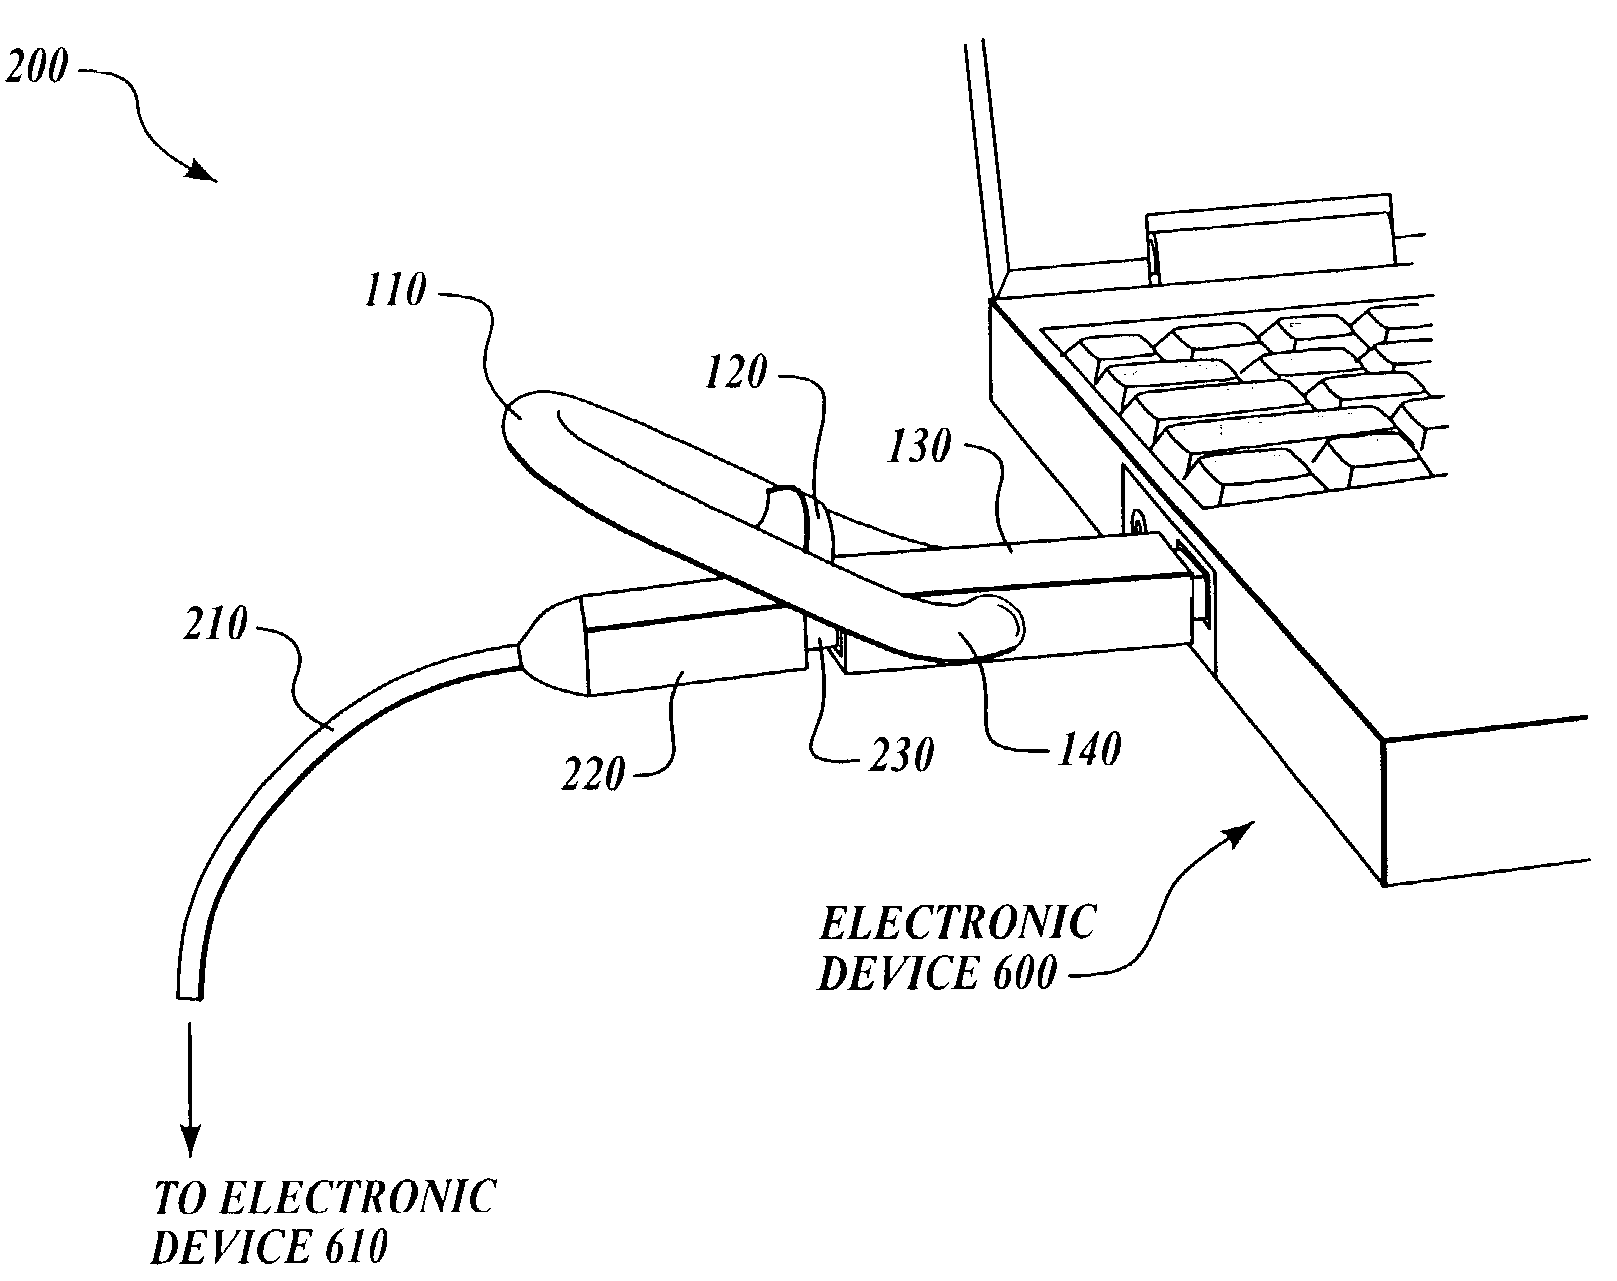 Automatic antenna orientation for USB pass-through port